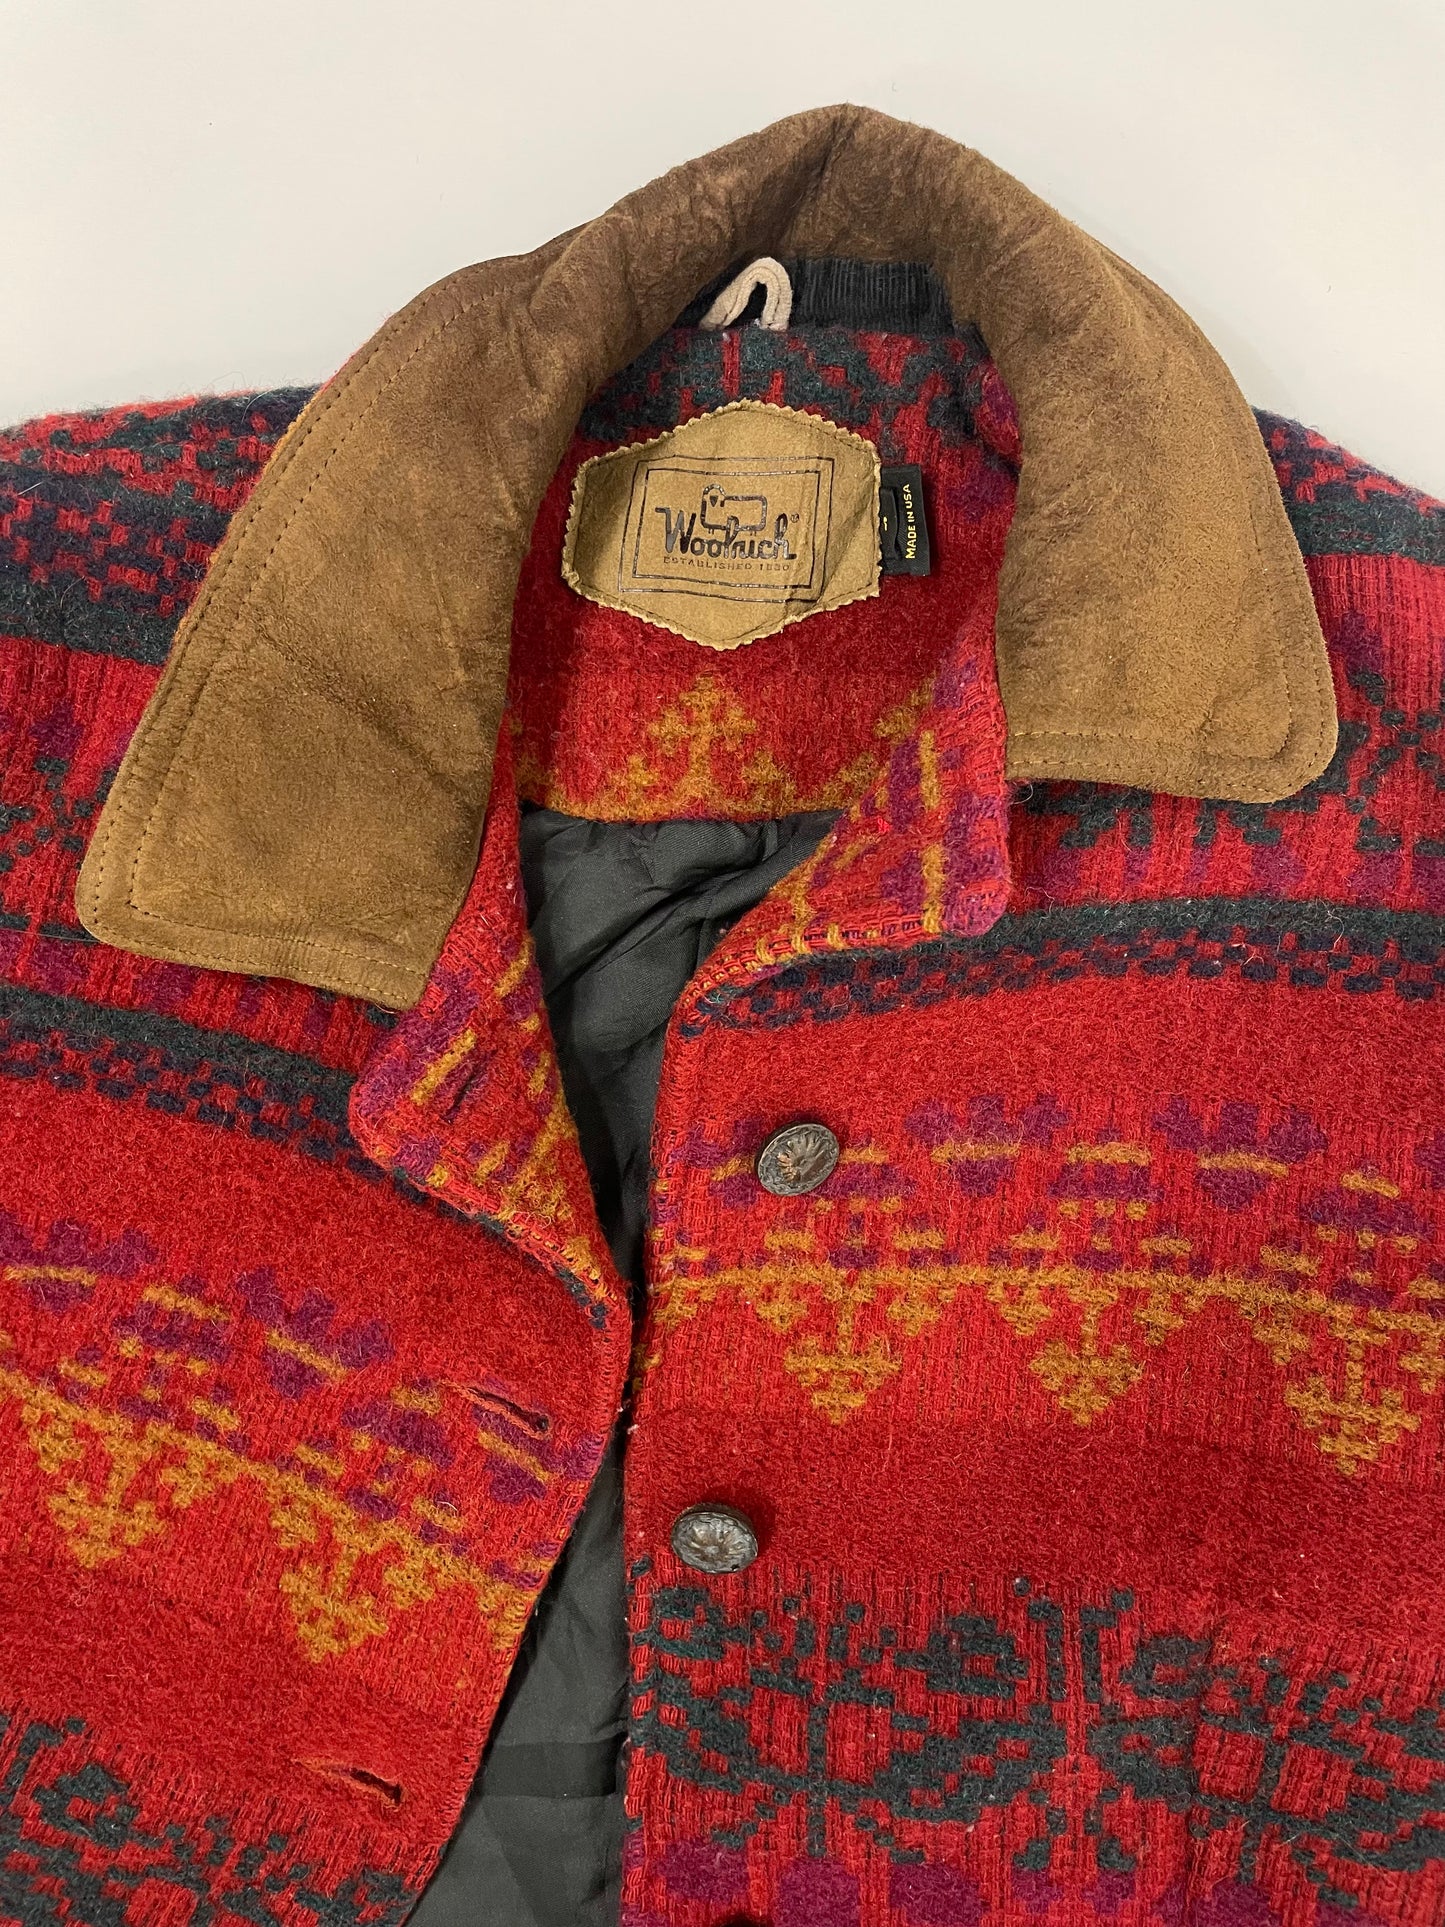 Woolrich Jacket Made in U.S.A.